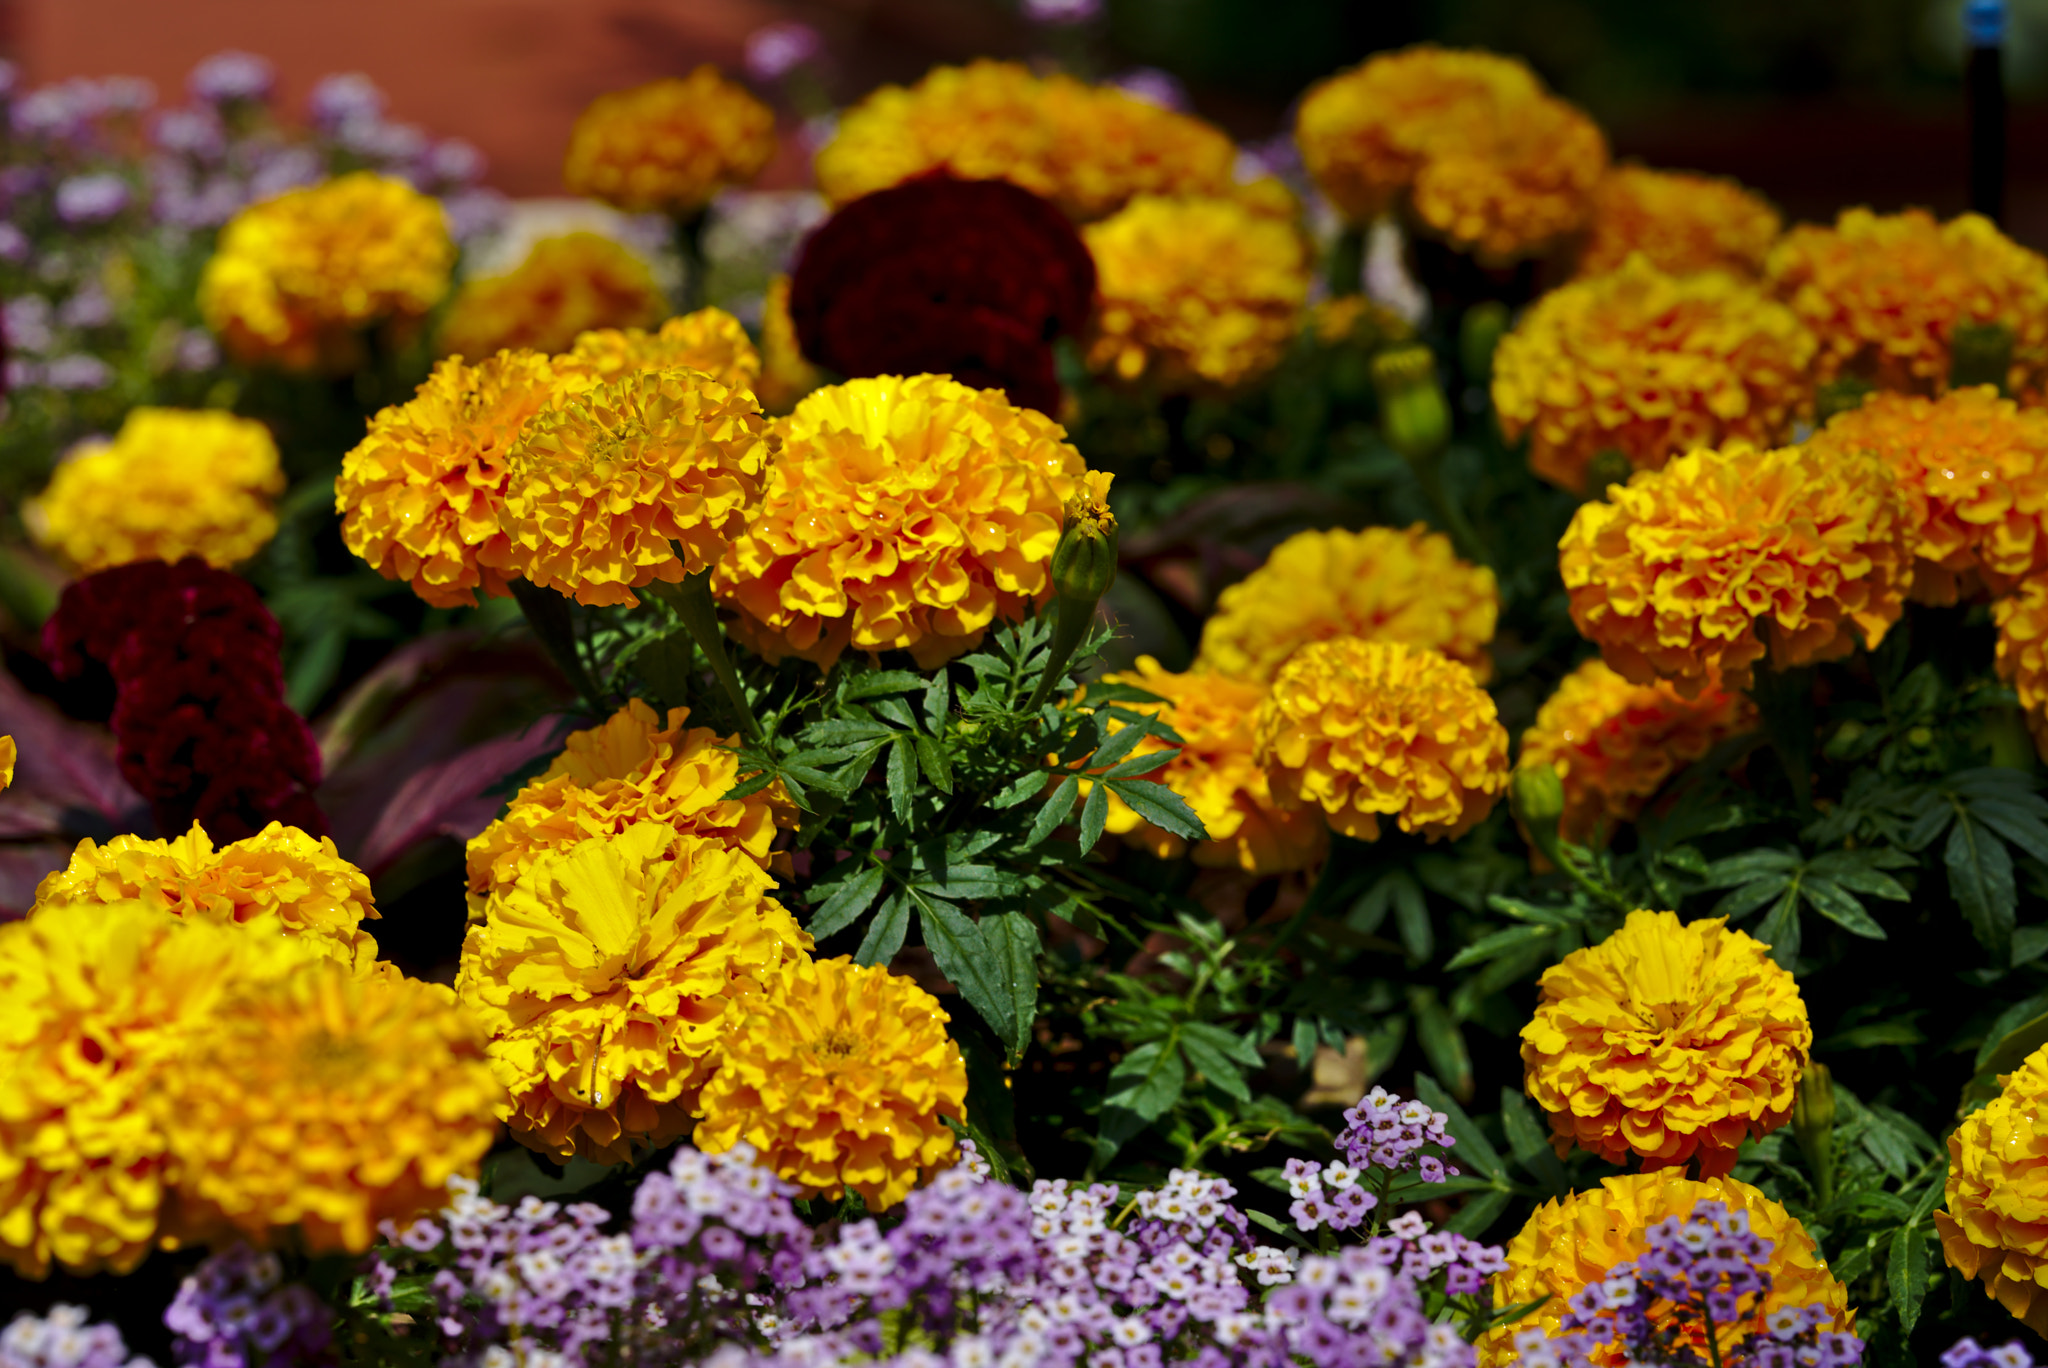 ZEISS Otus 85mm F1.4 sample photo. Chrysanthemum photography